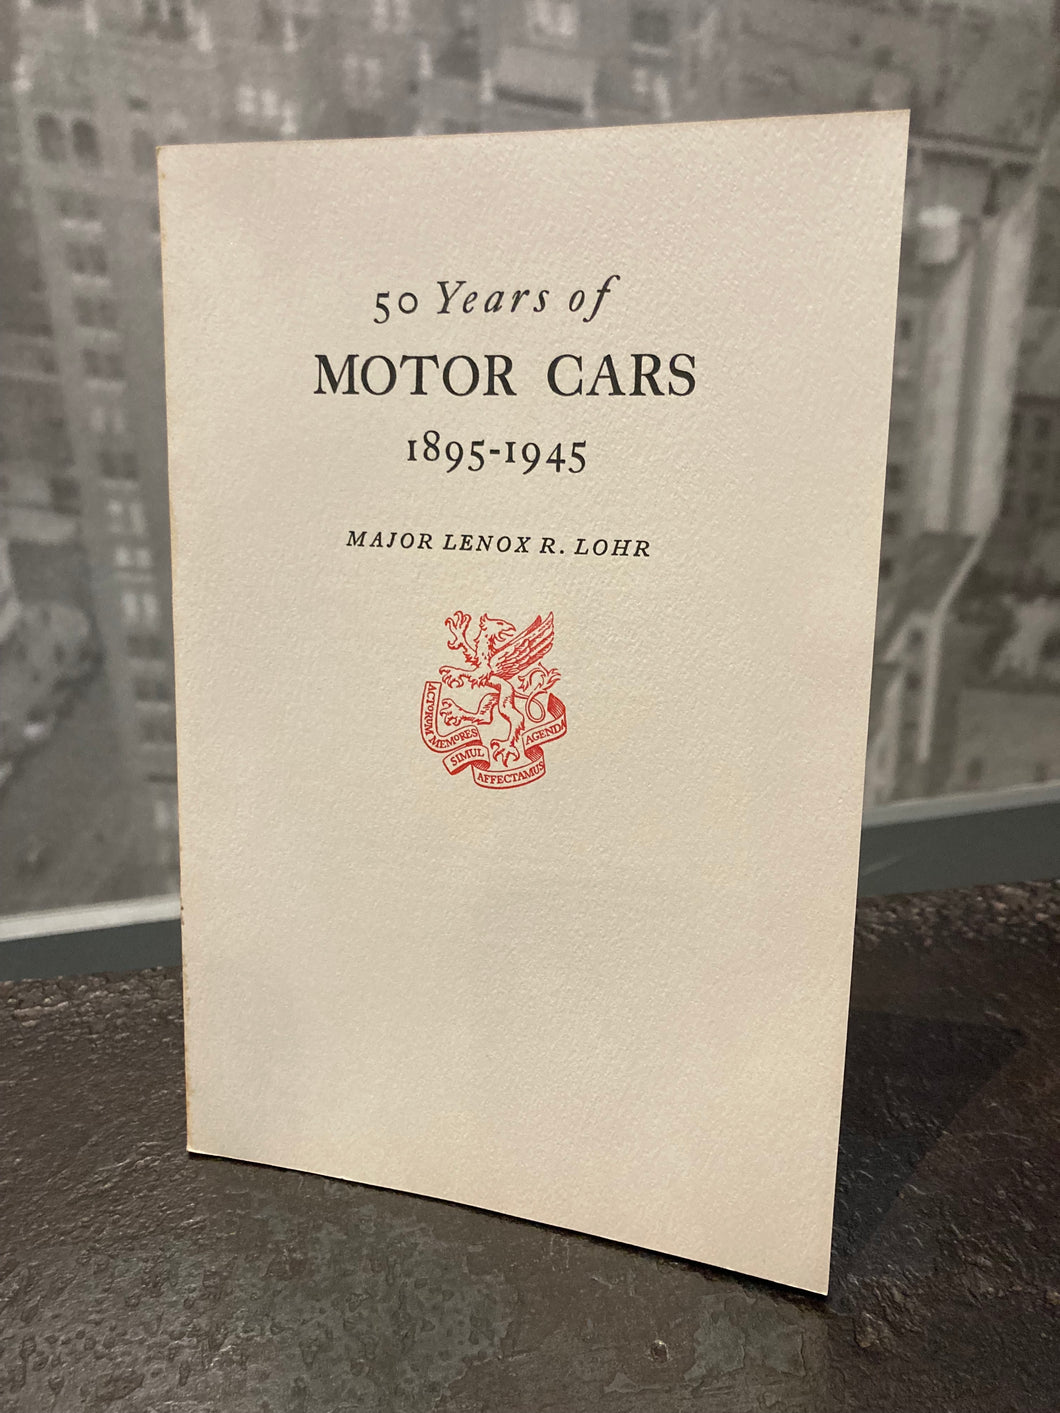 50 Years of Motor Cars: 1895-1945